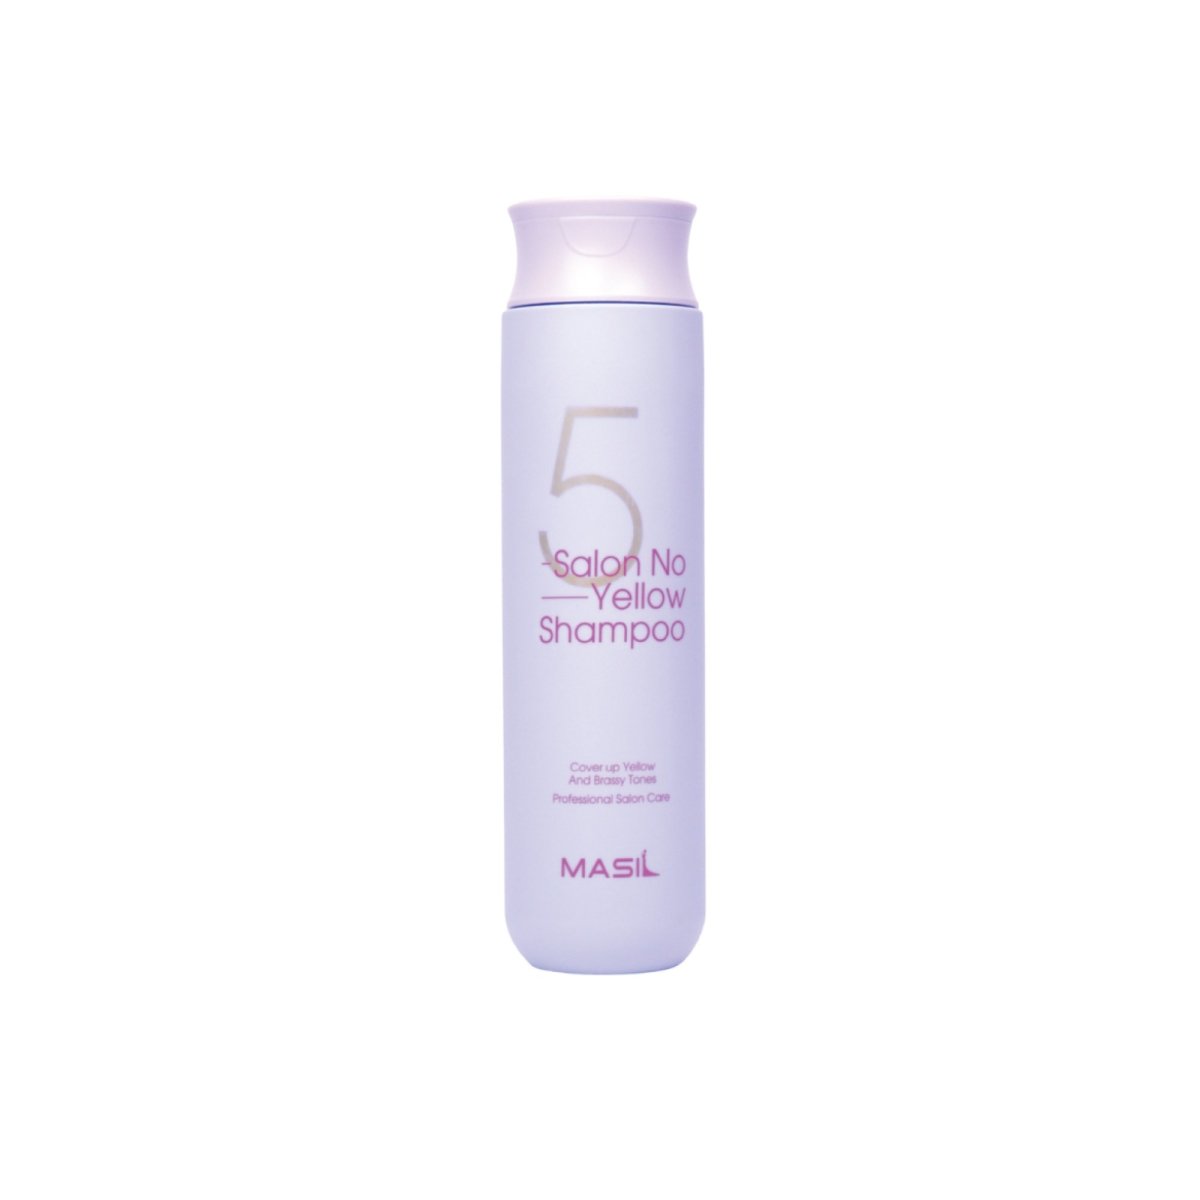 [MASIL] Shampoo Nutritivo para Cabelo Tingido 5 Salon No Yellow Shampoo 300ml 🇰🇷